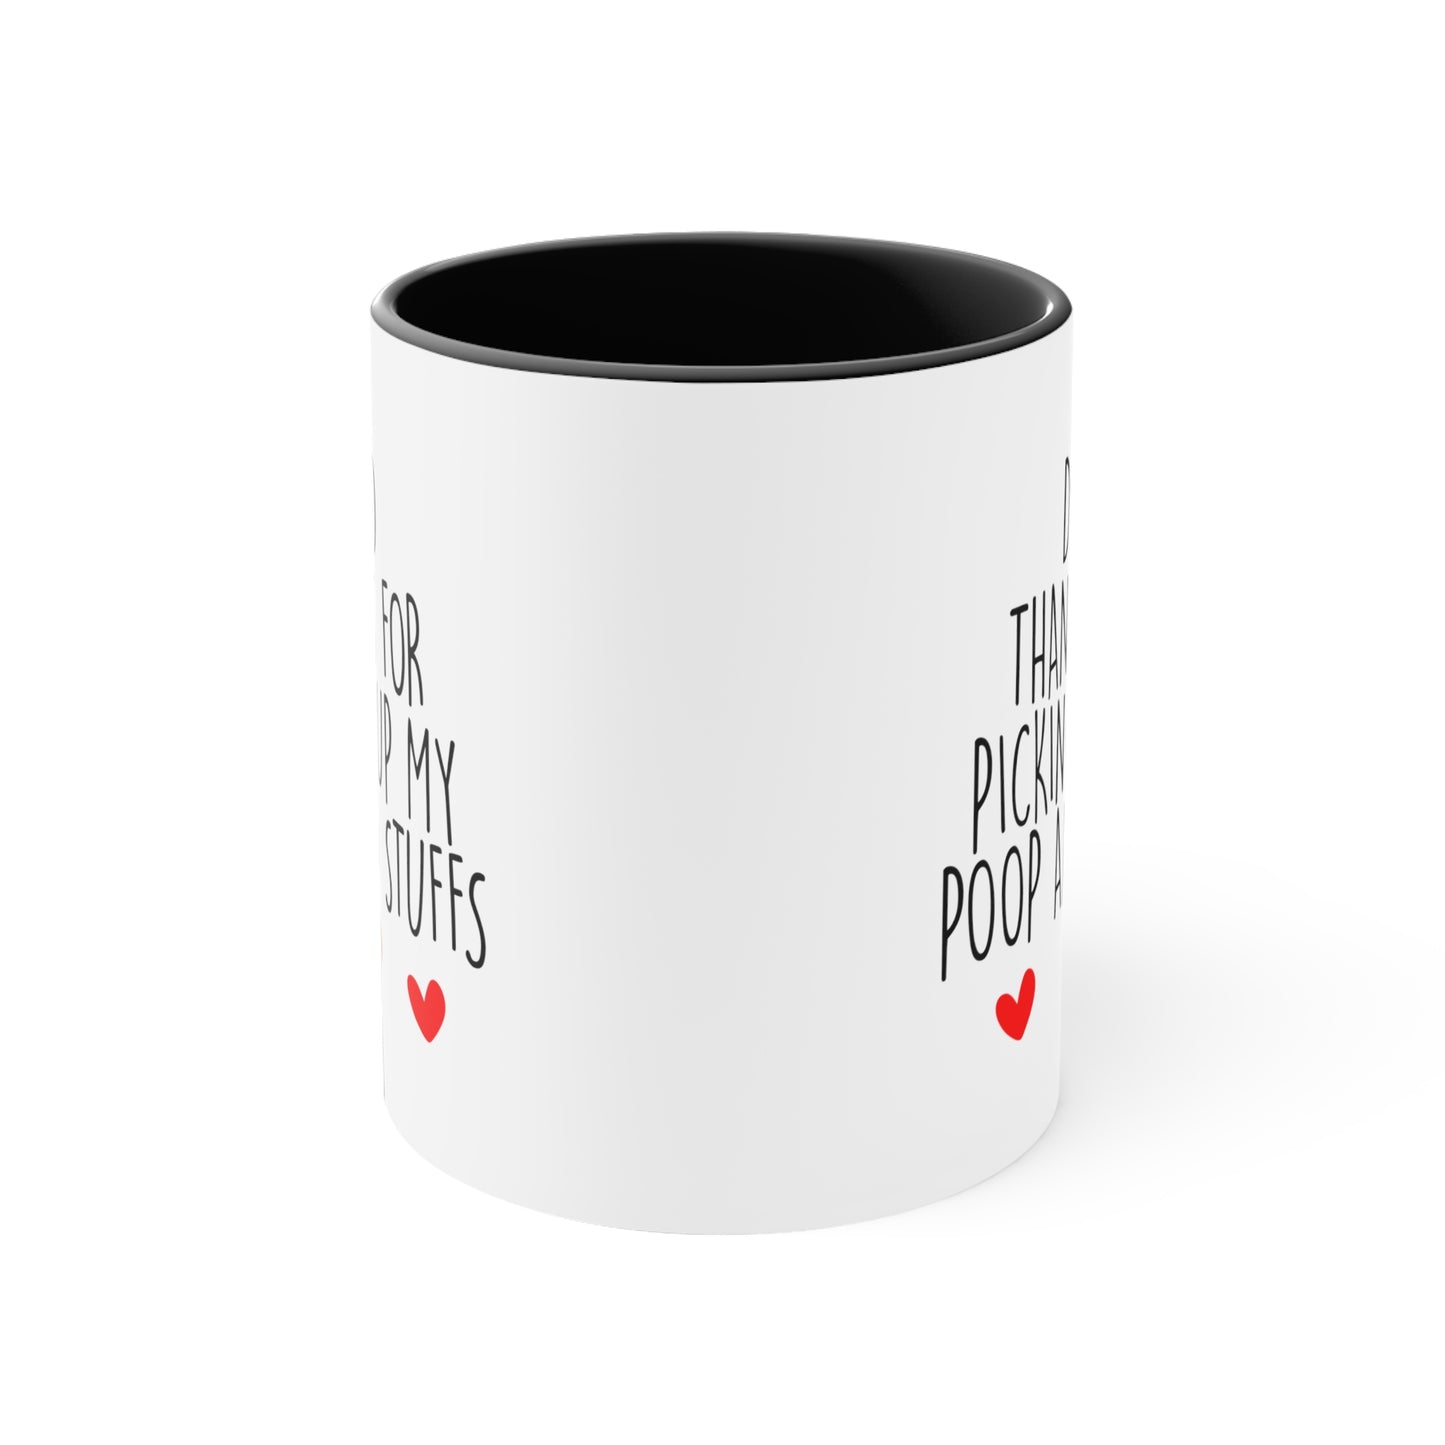 Dog Poop Coffee Mug - Double Sided Black Accent White Ceramic 11oz by TheGlassyLass.com